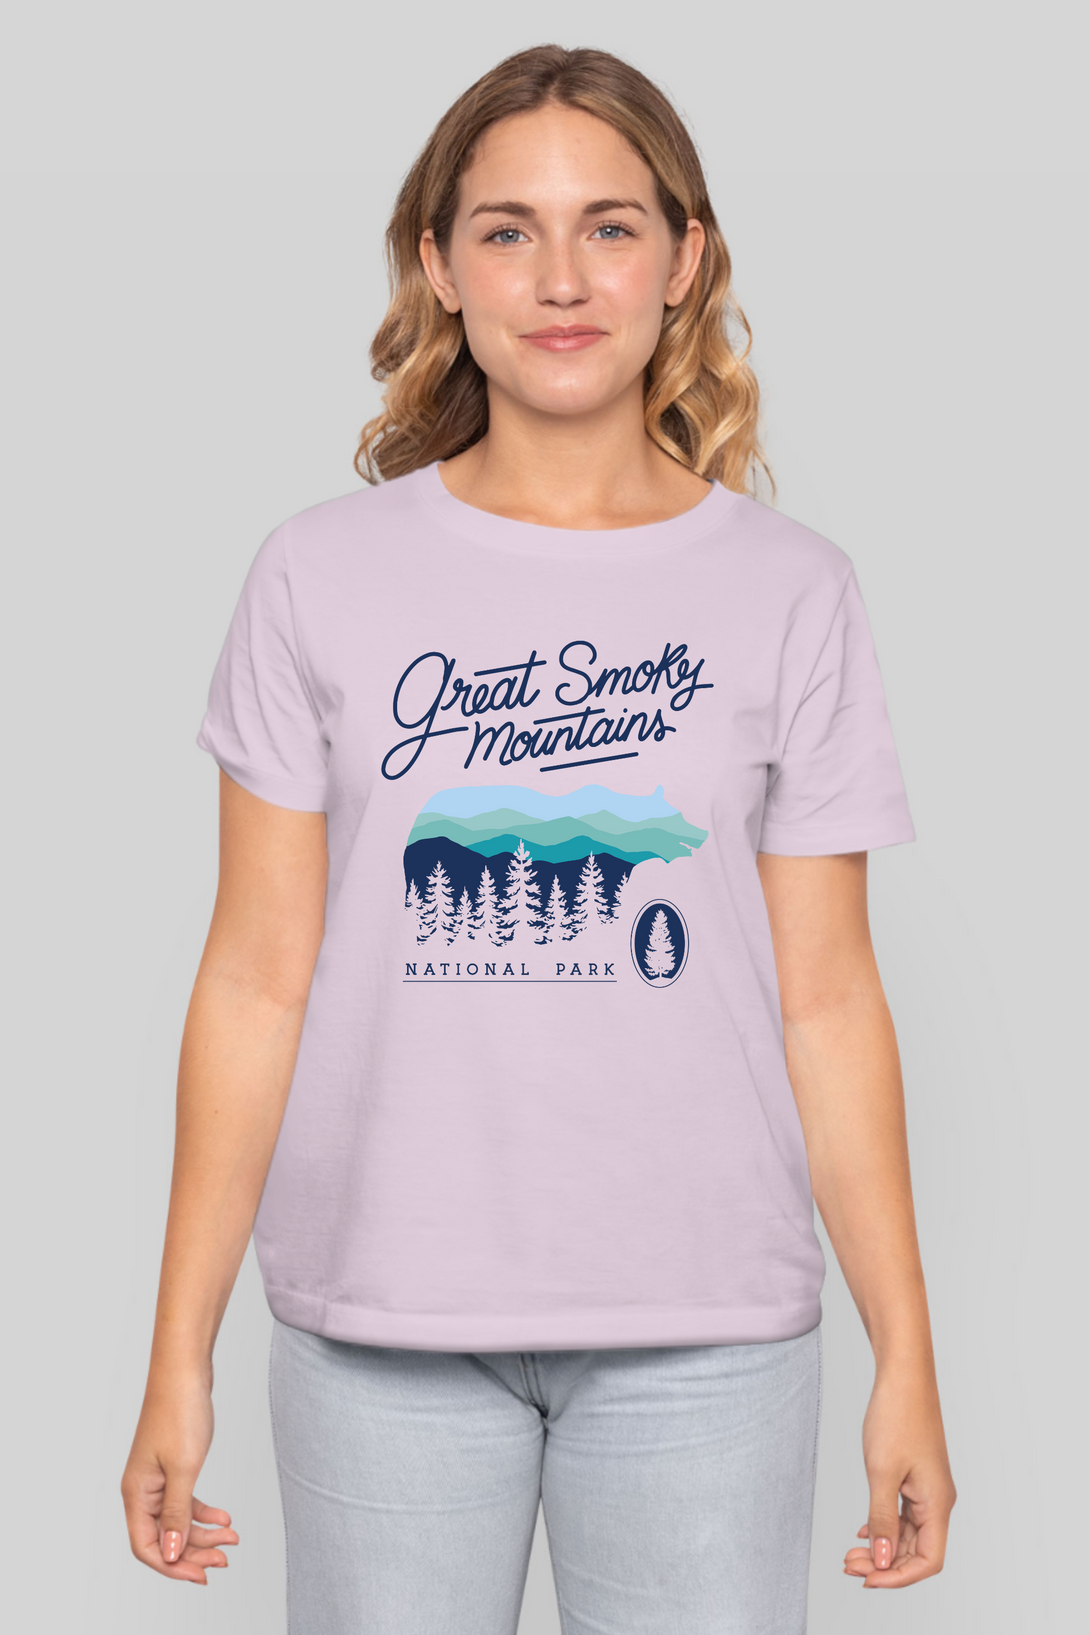 Smoky Summit Printed T-Shirt For Women - WowWaves - 8